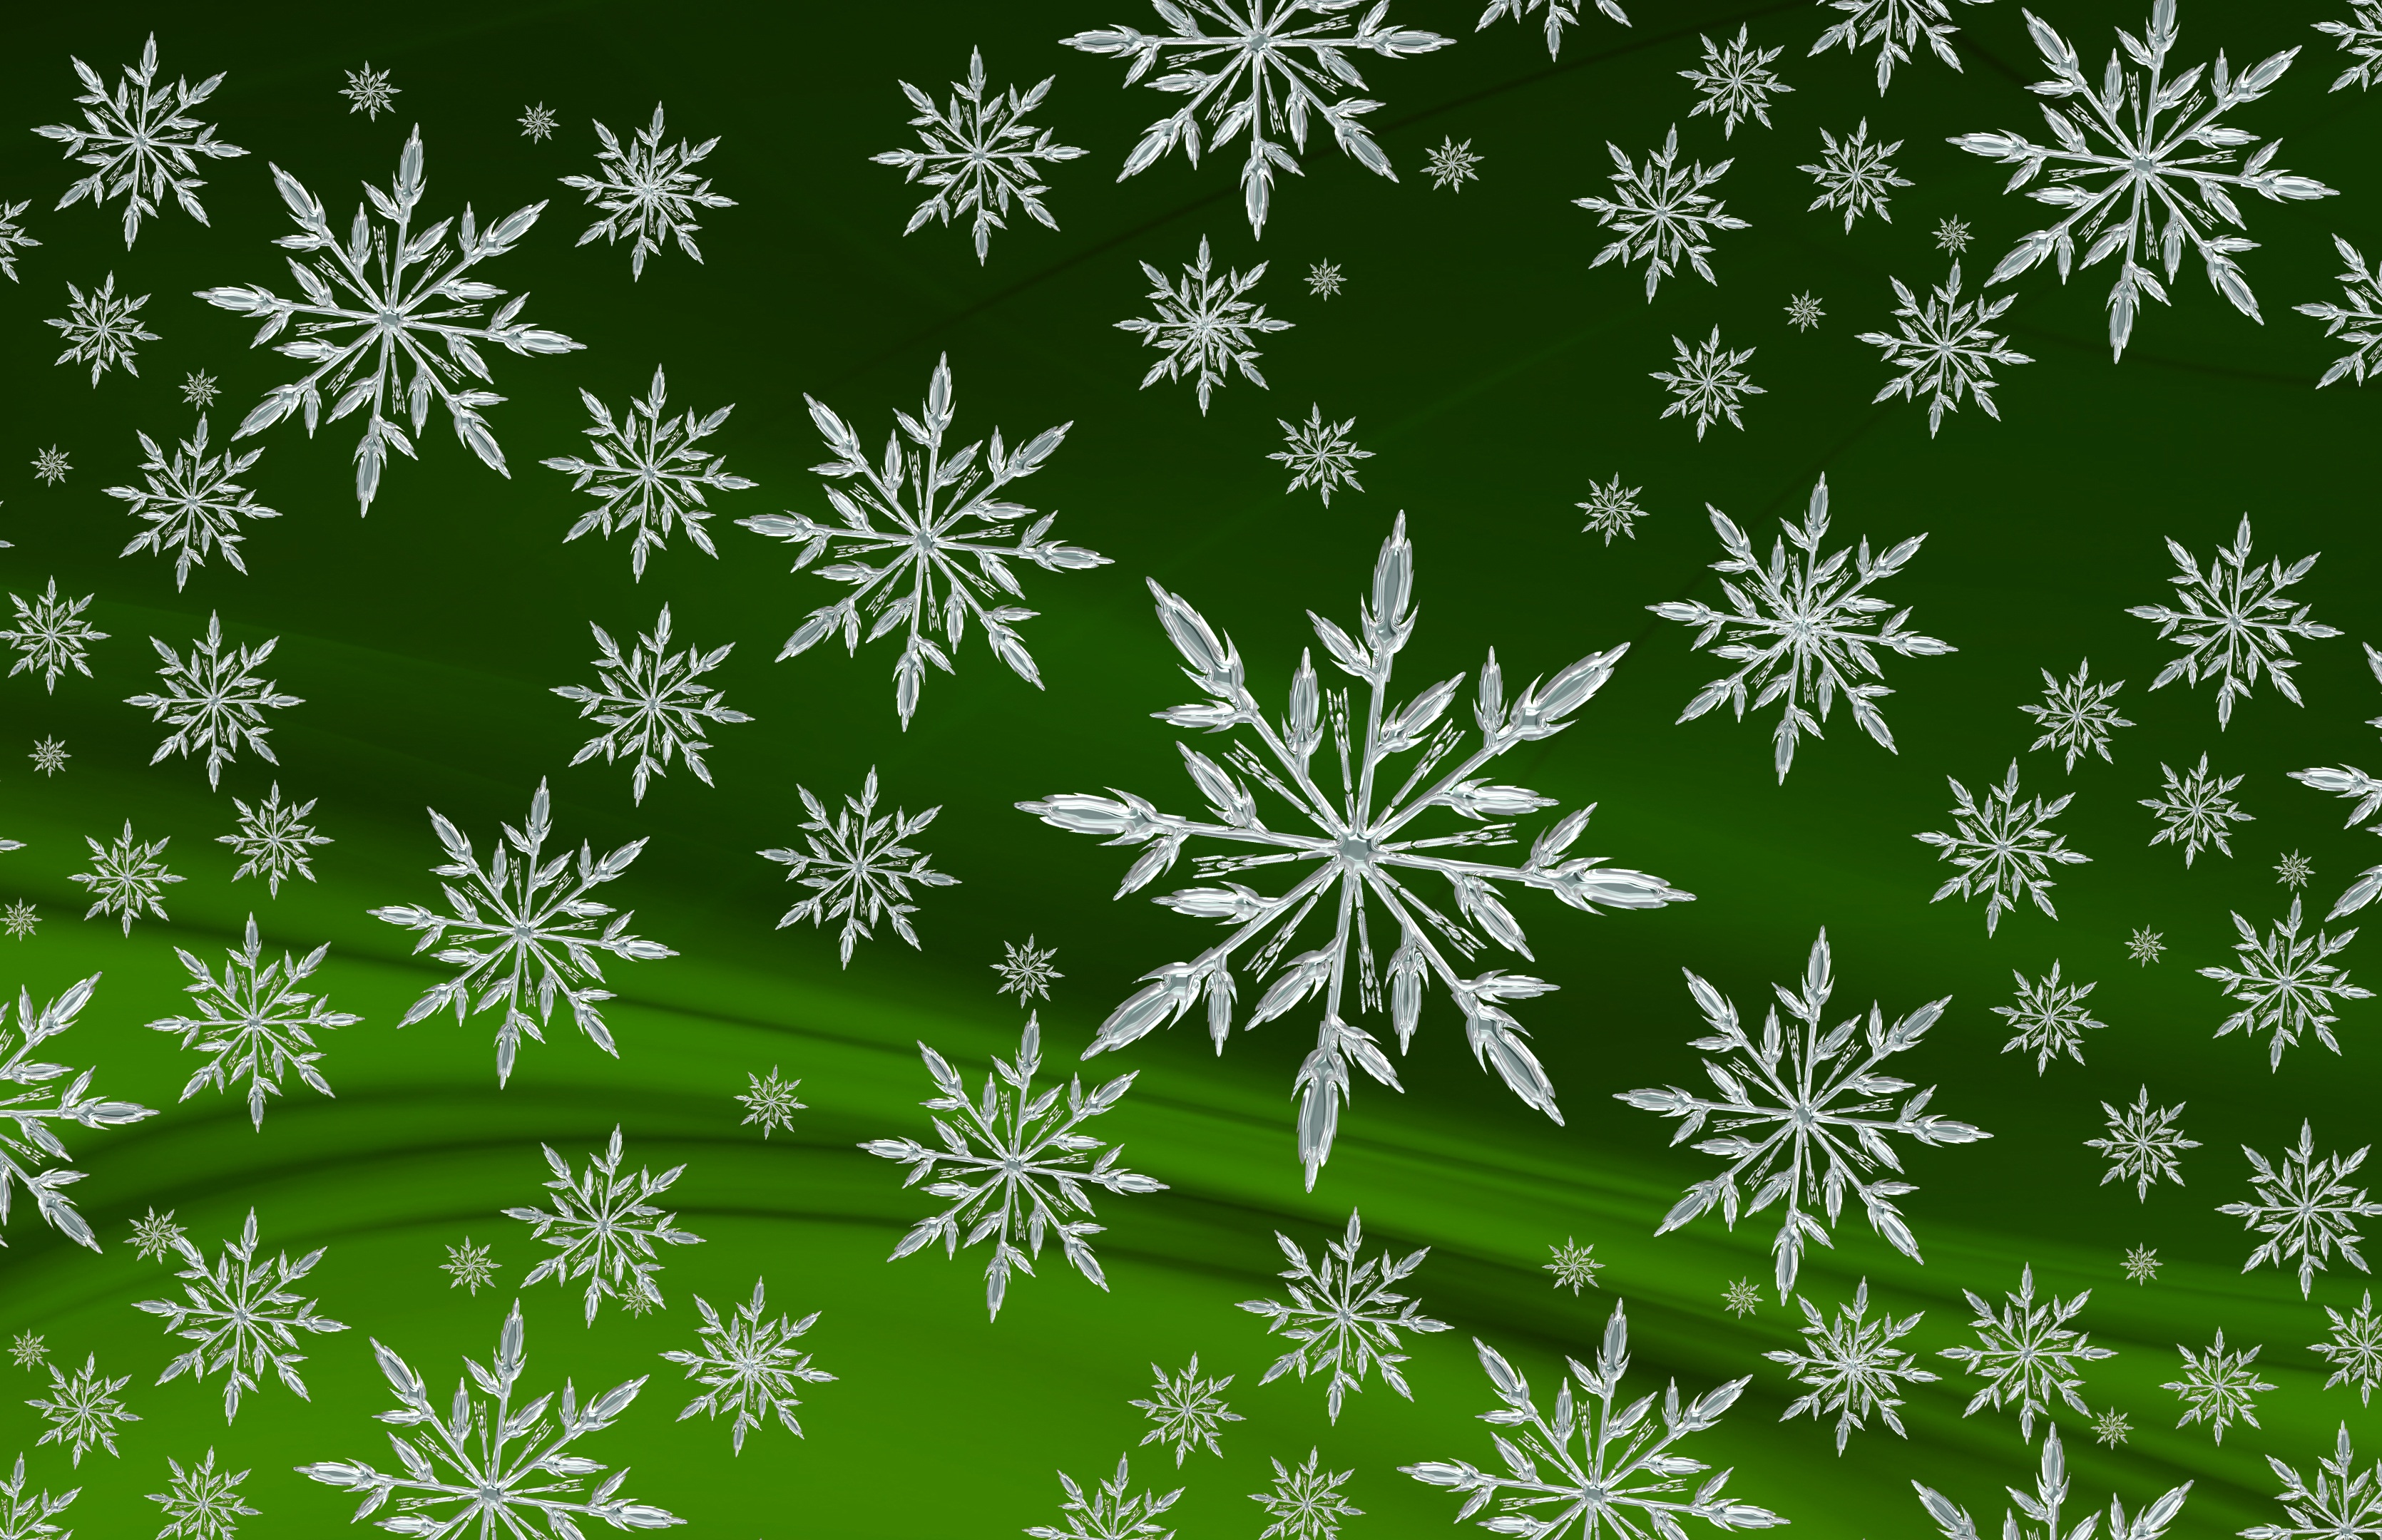 Snowflake Christmas Wallpaper by Gerd Altmann